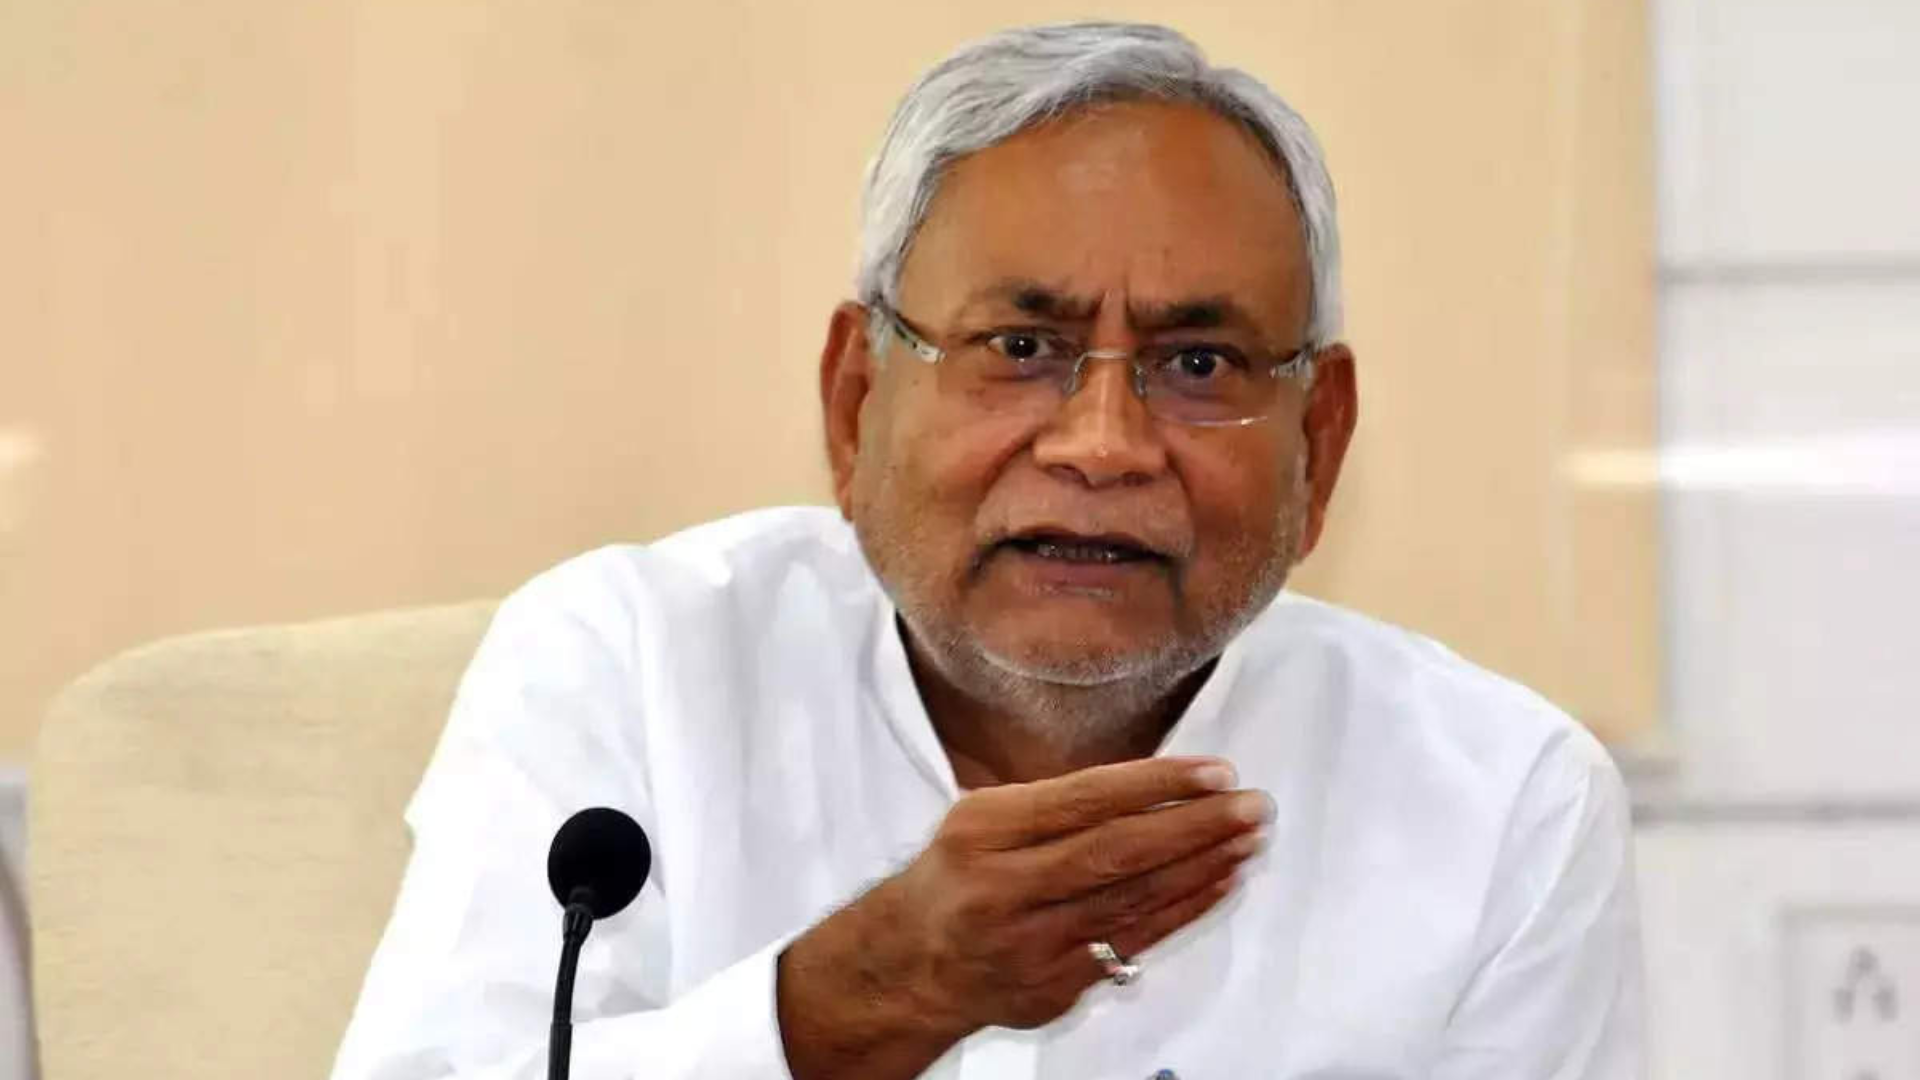 Watch: What Bihar CM Nitish Kumar Said About Union Budget Boost